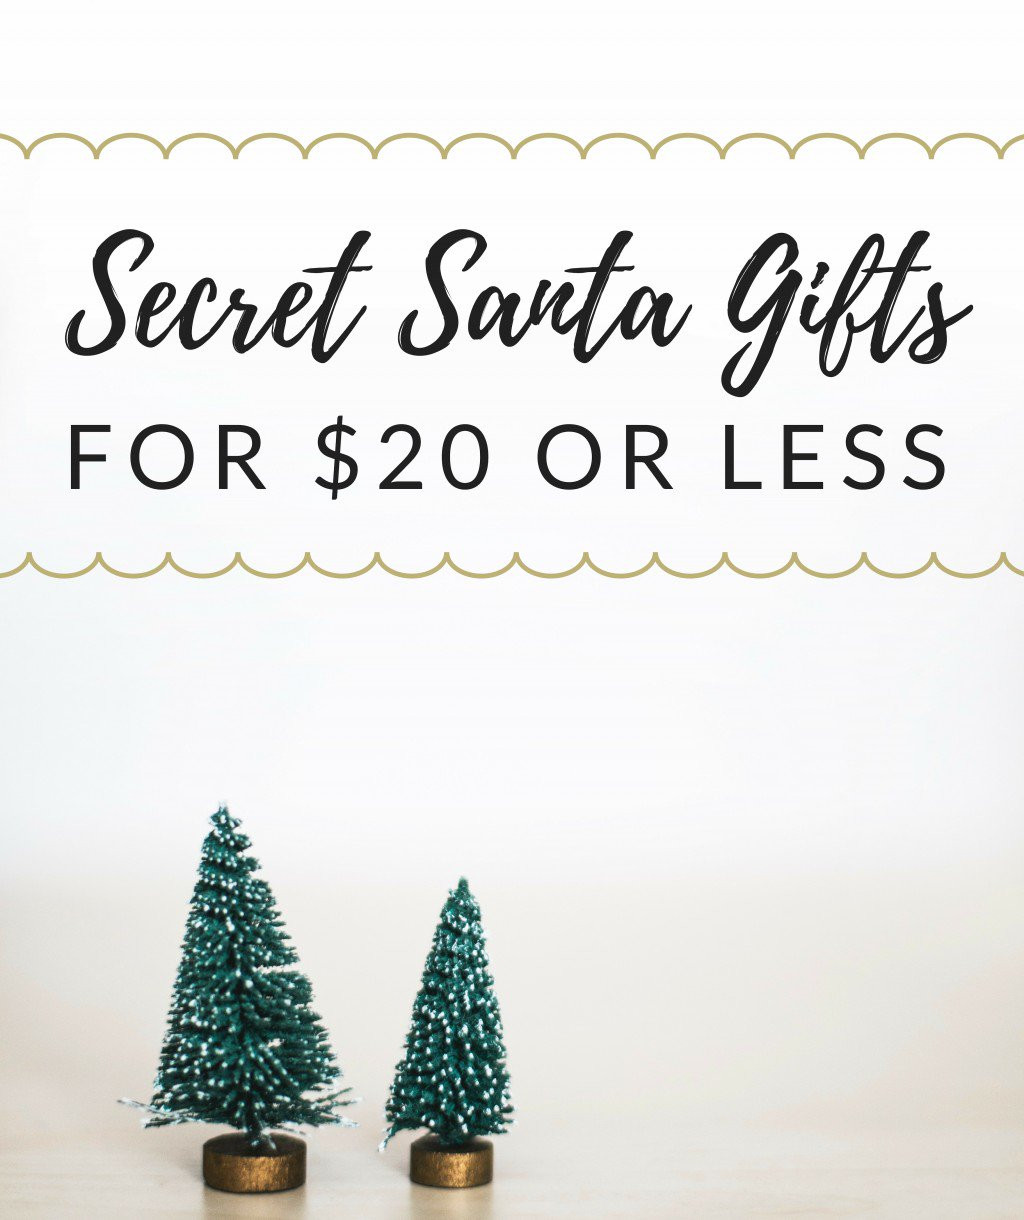 Christmas Gift Exchange Ideas Under 20
 Uni Secret Santa Gift Ideas for Under $20